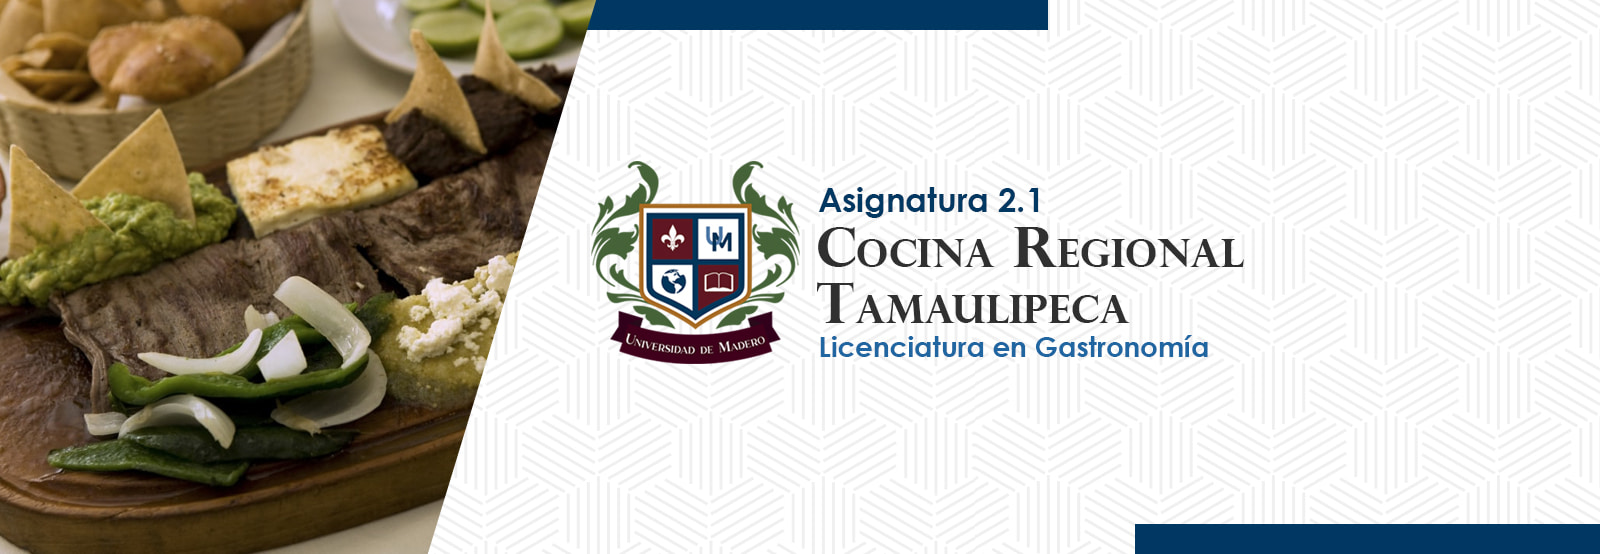 LG0201 Cocina Regional Tamaulipeca